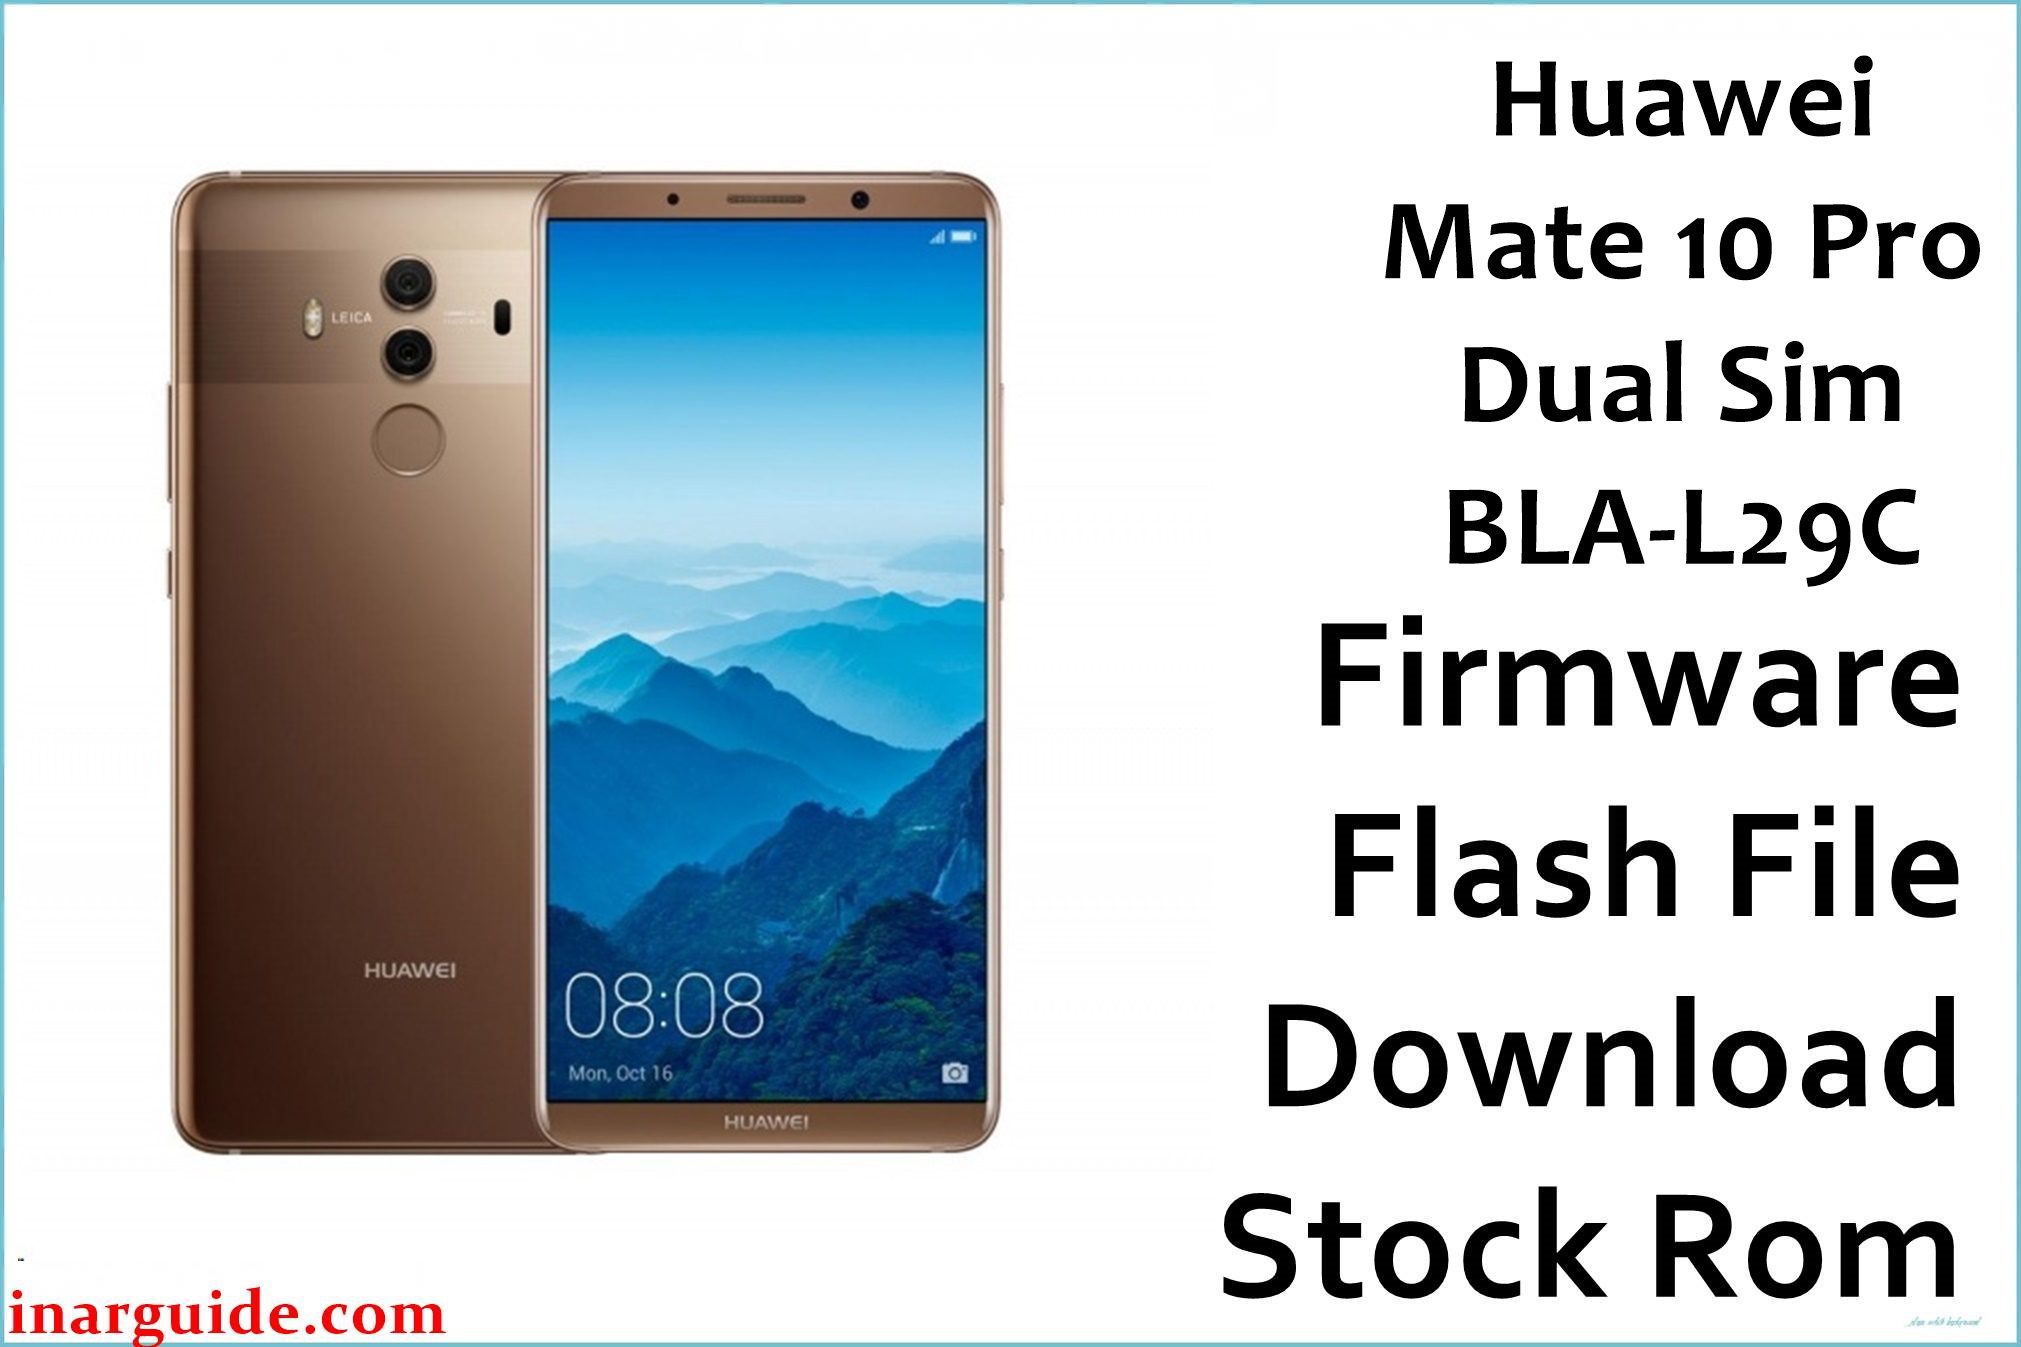 Huawei Mate 10 Pro Dual Sim BLA L29C